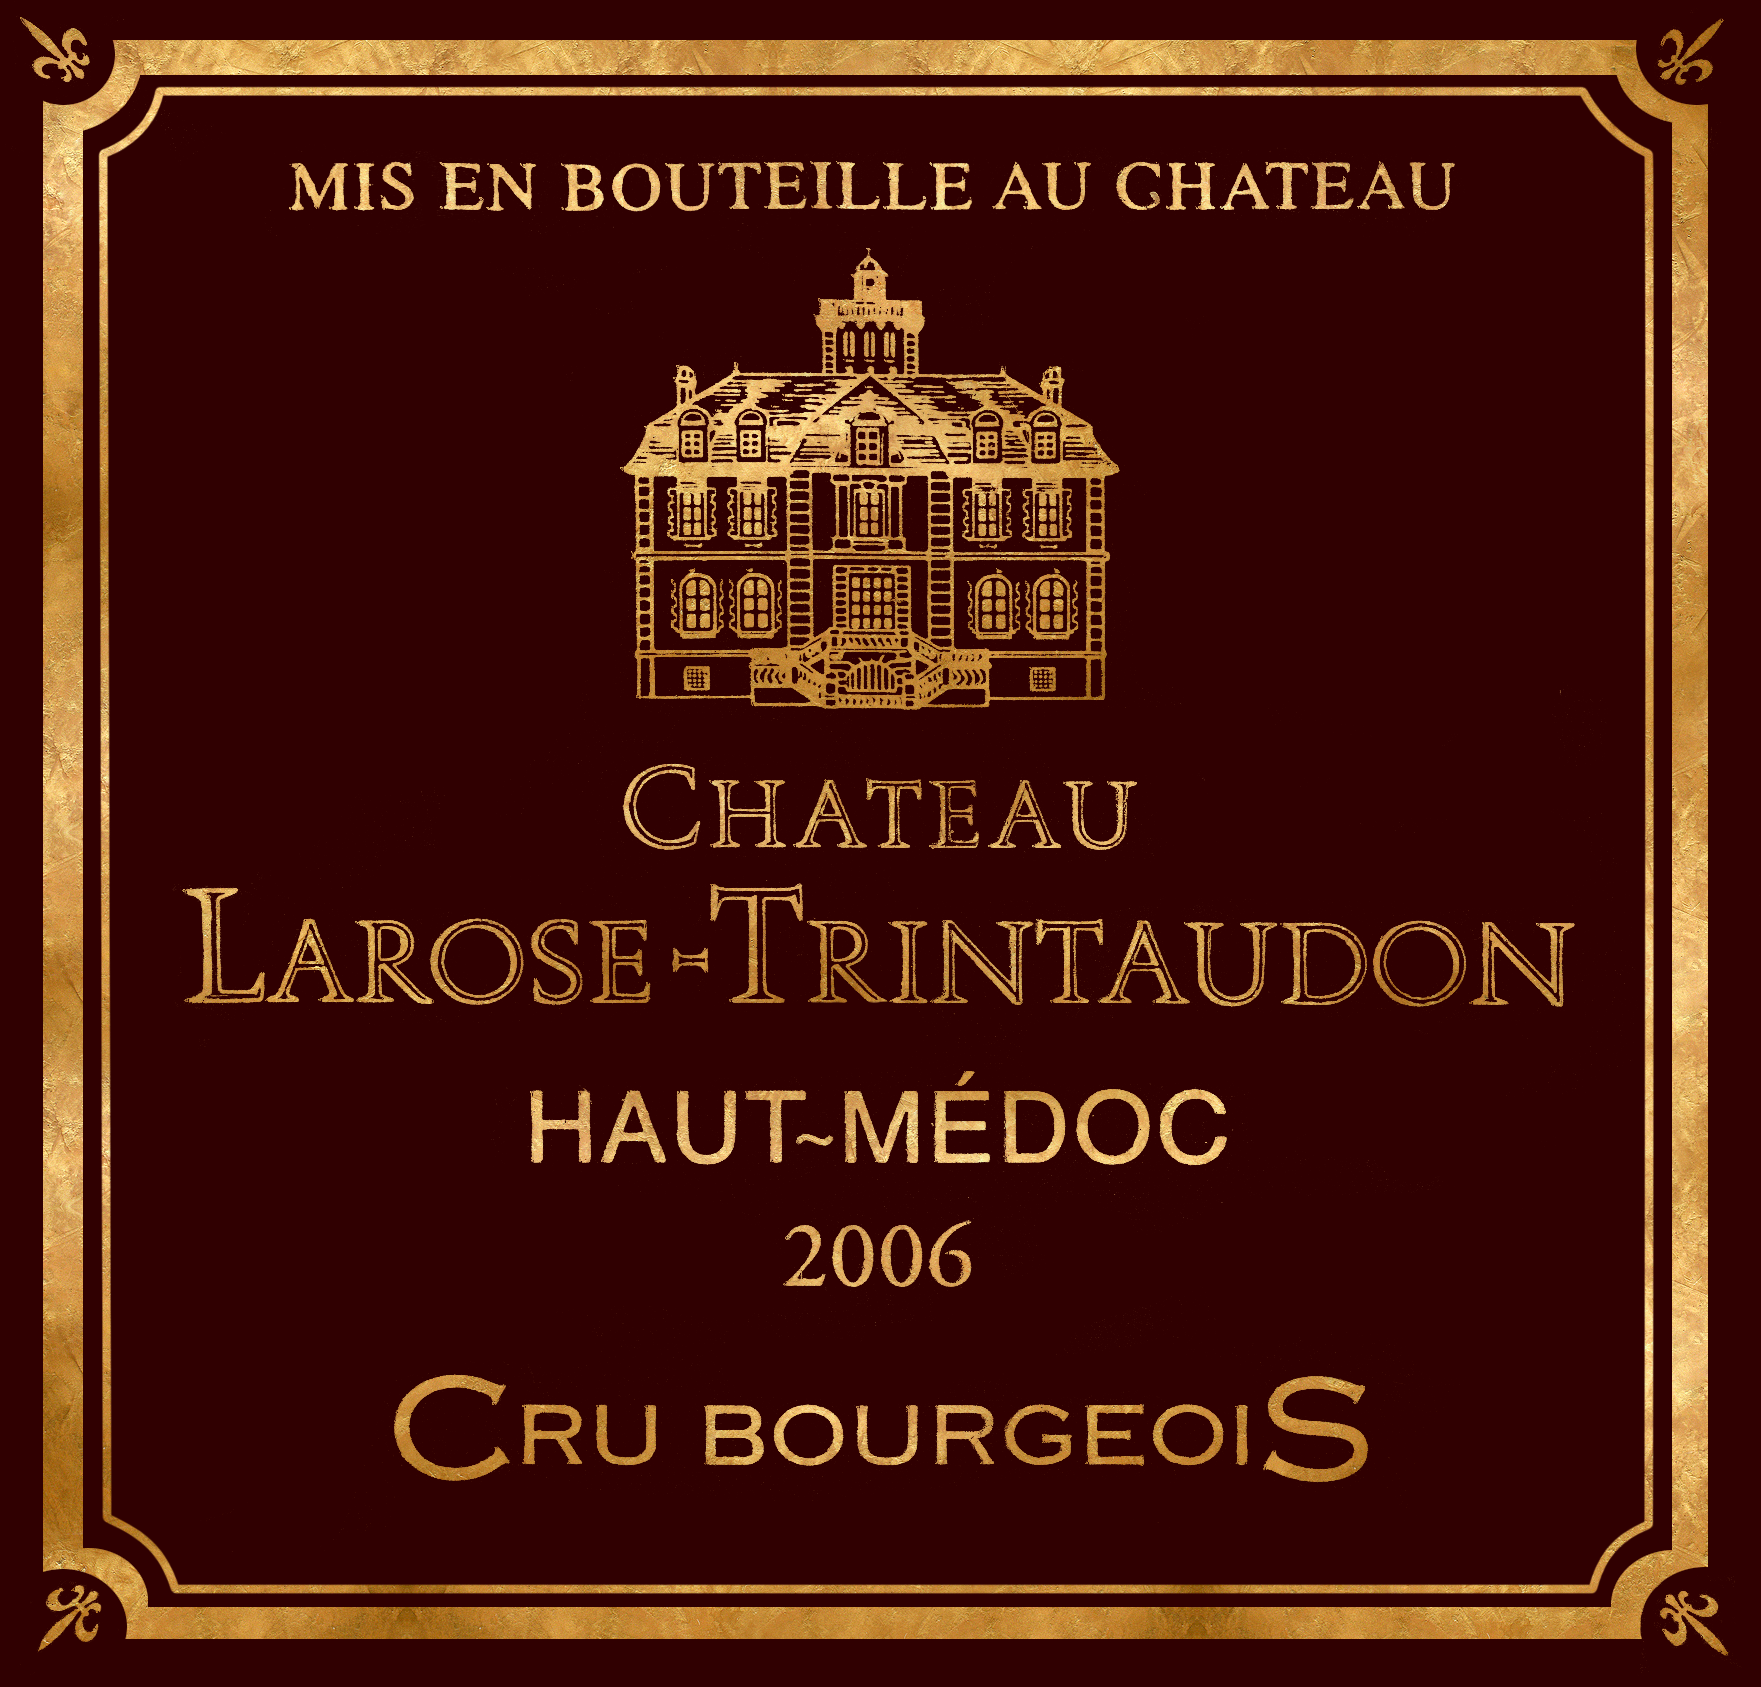 Larose Trintaudon, Bordeaux, Haut Medoc, France, AOC, Cru Bourgeois